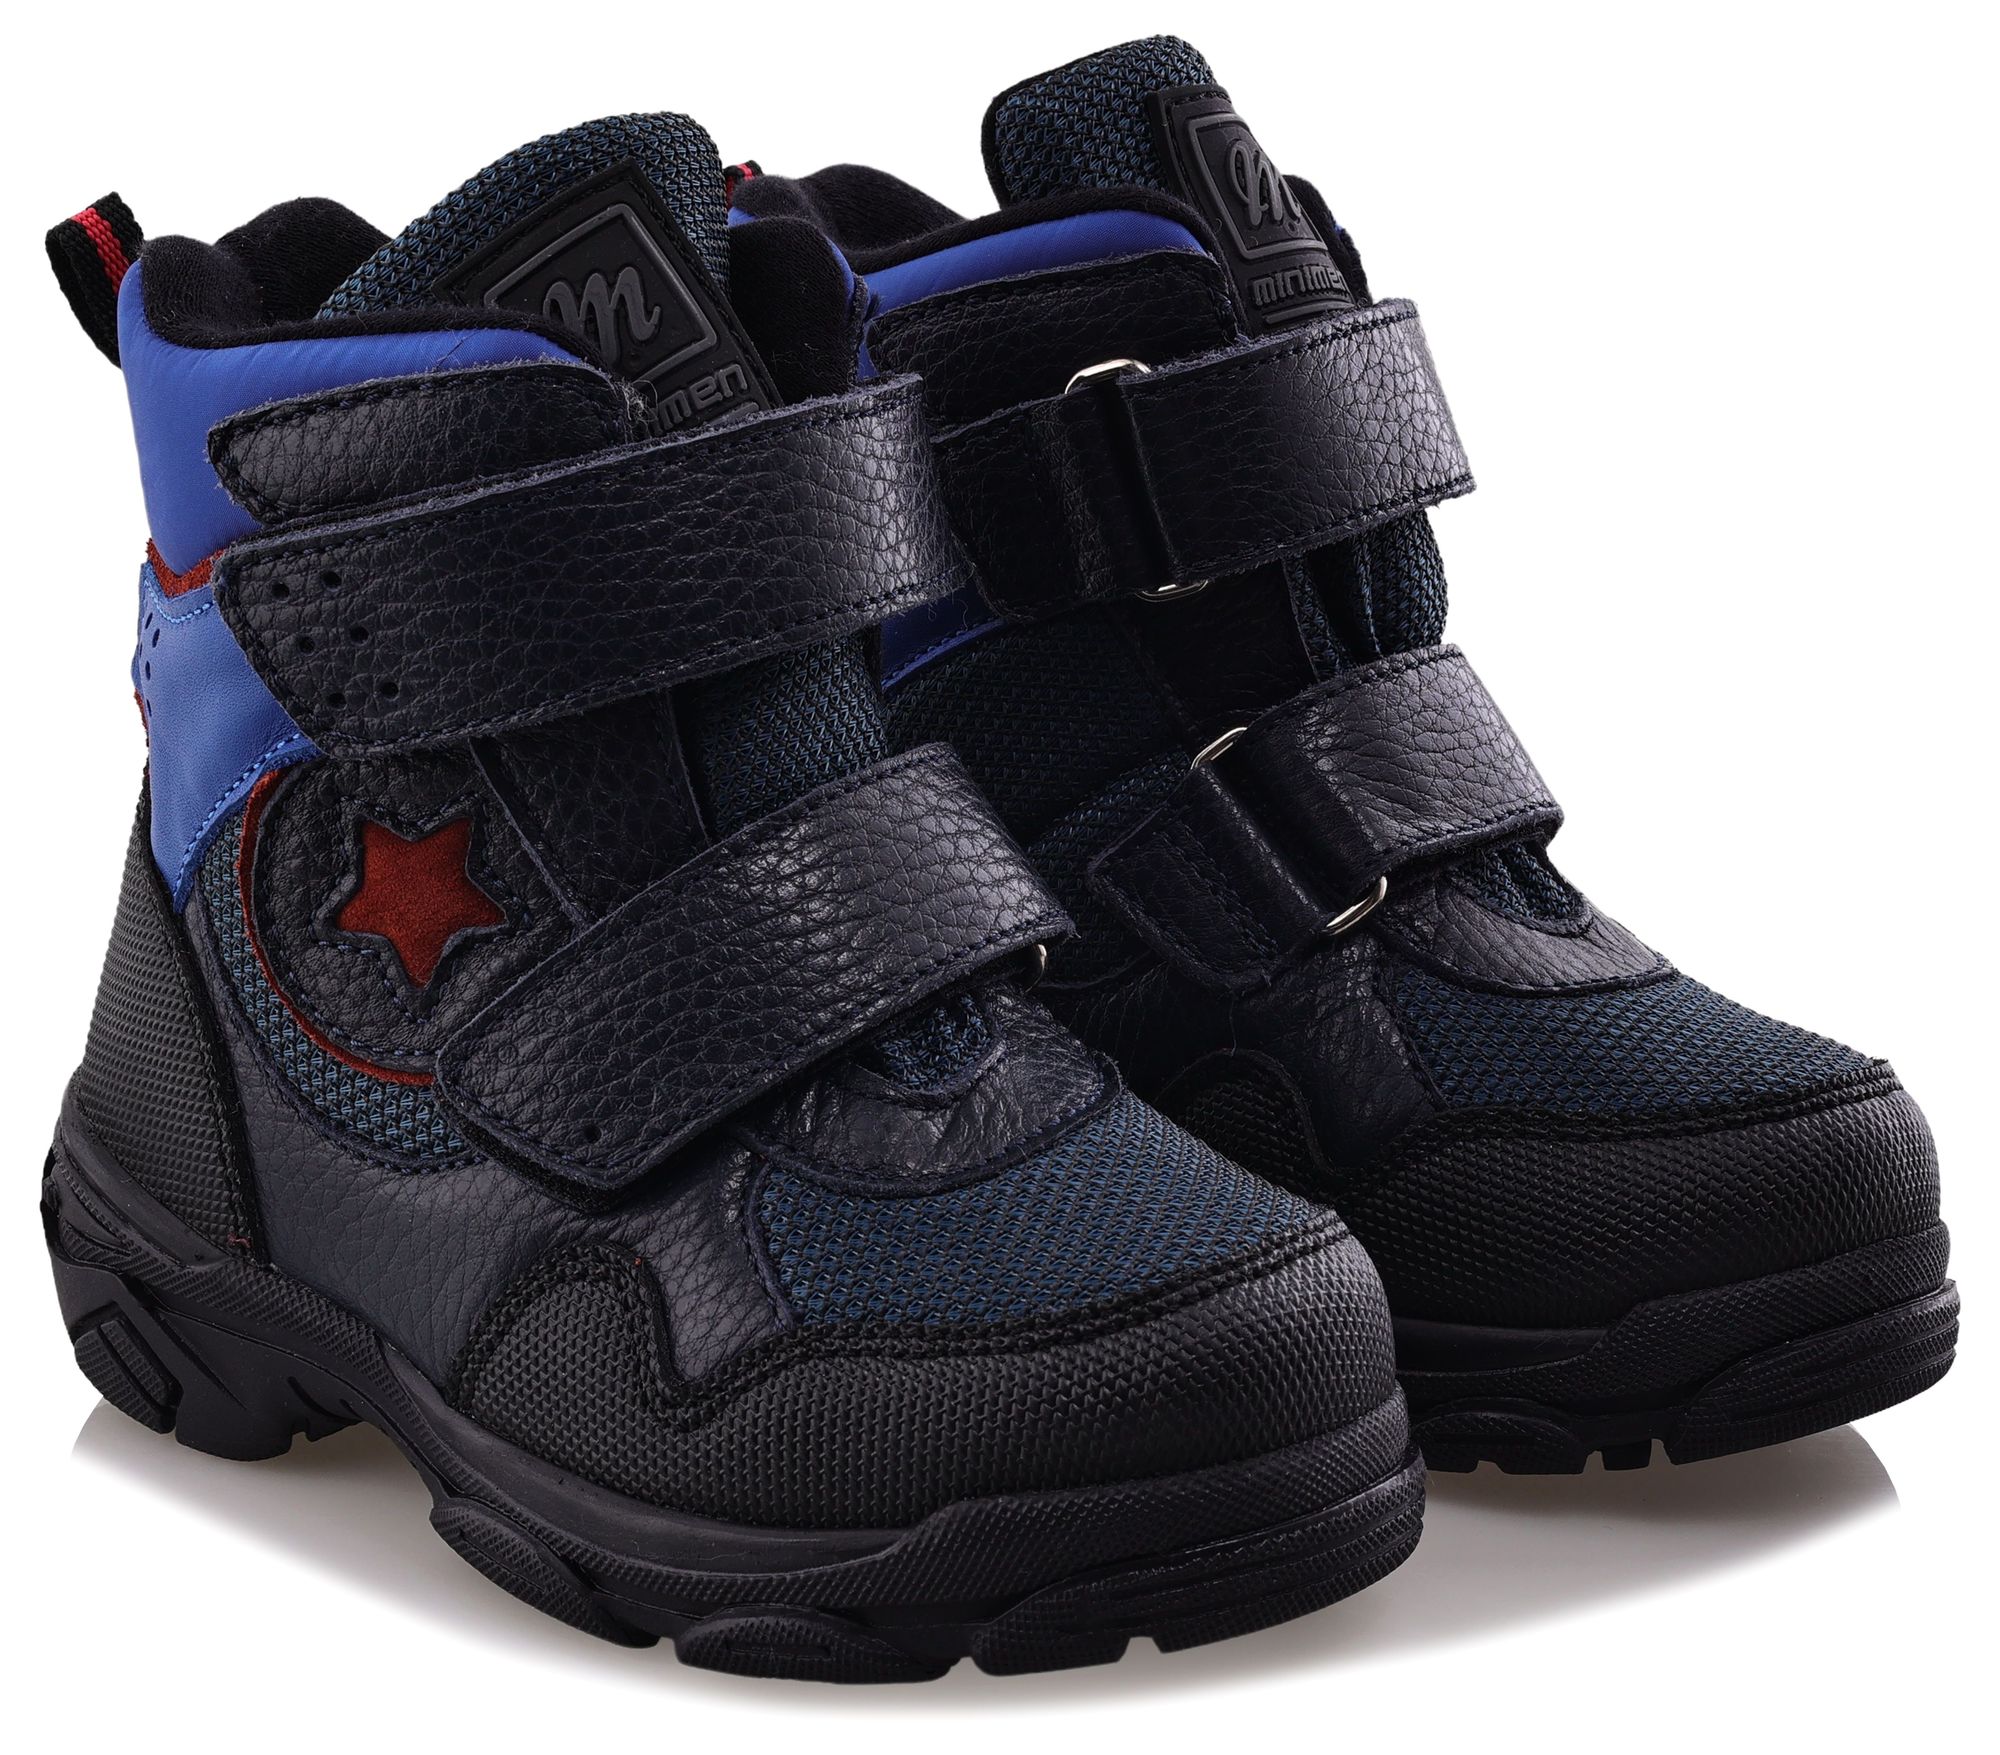 Ботинки Minimen для мальчиков, тёмно-синие, размер 24, 2658-52-23B-01 ботинки minimen для девочек сиреневые размер 29 2658 63 23b 04